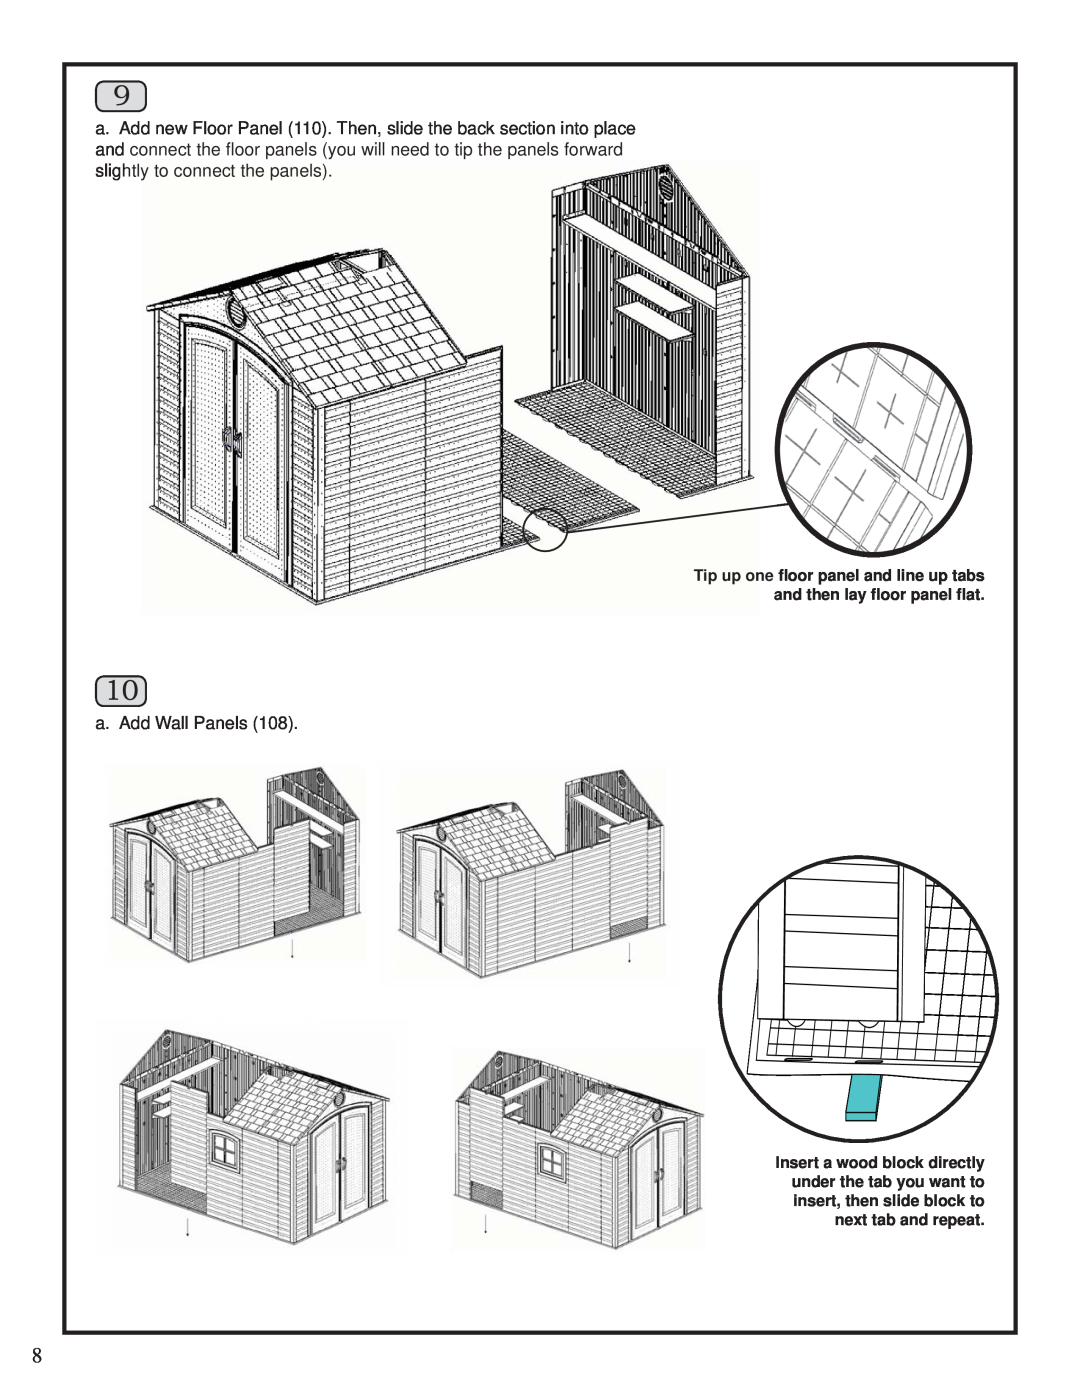 AB Soft 6424 manual a. Add Wall Panels 